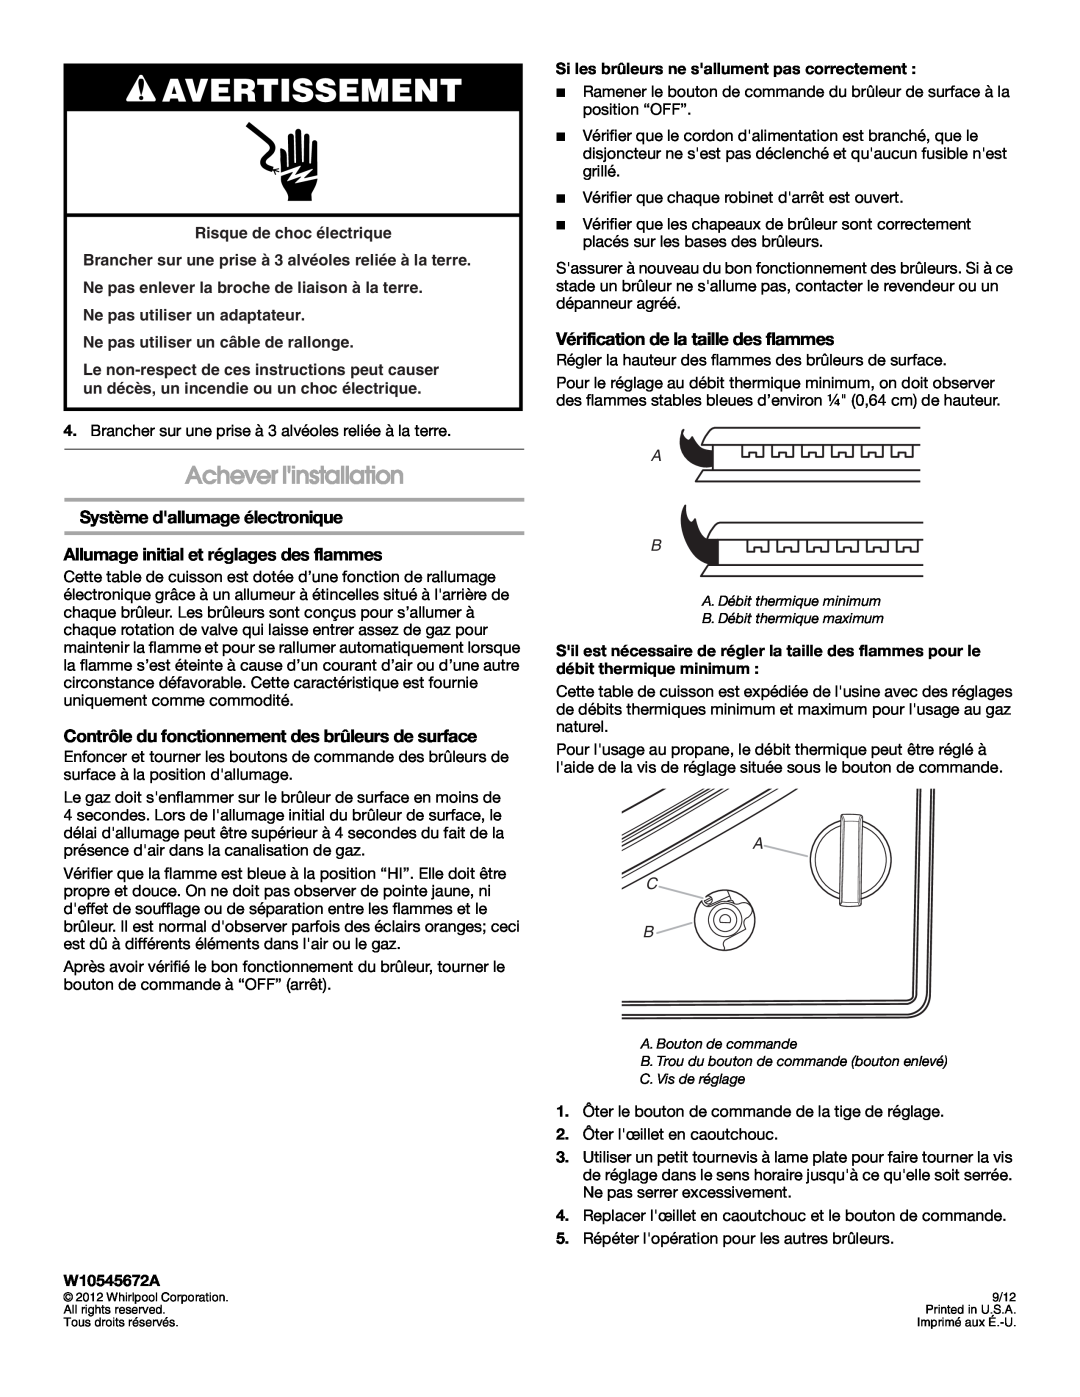 Whirlpool W10545672A installation instructions Achever linstallation, Avertissement, Système dallumage électronique, A C B 